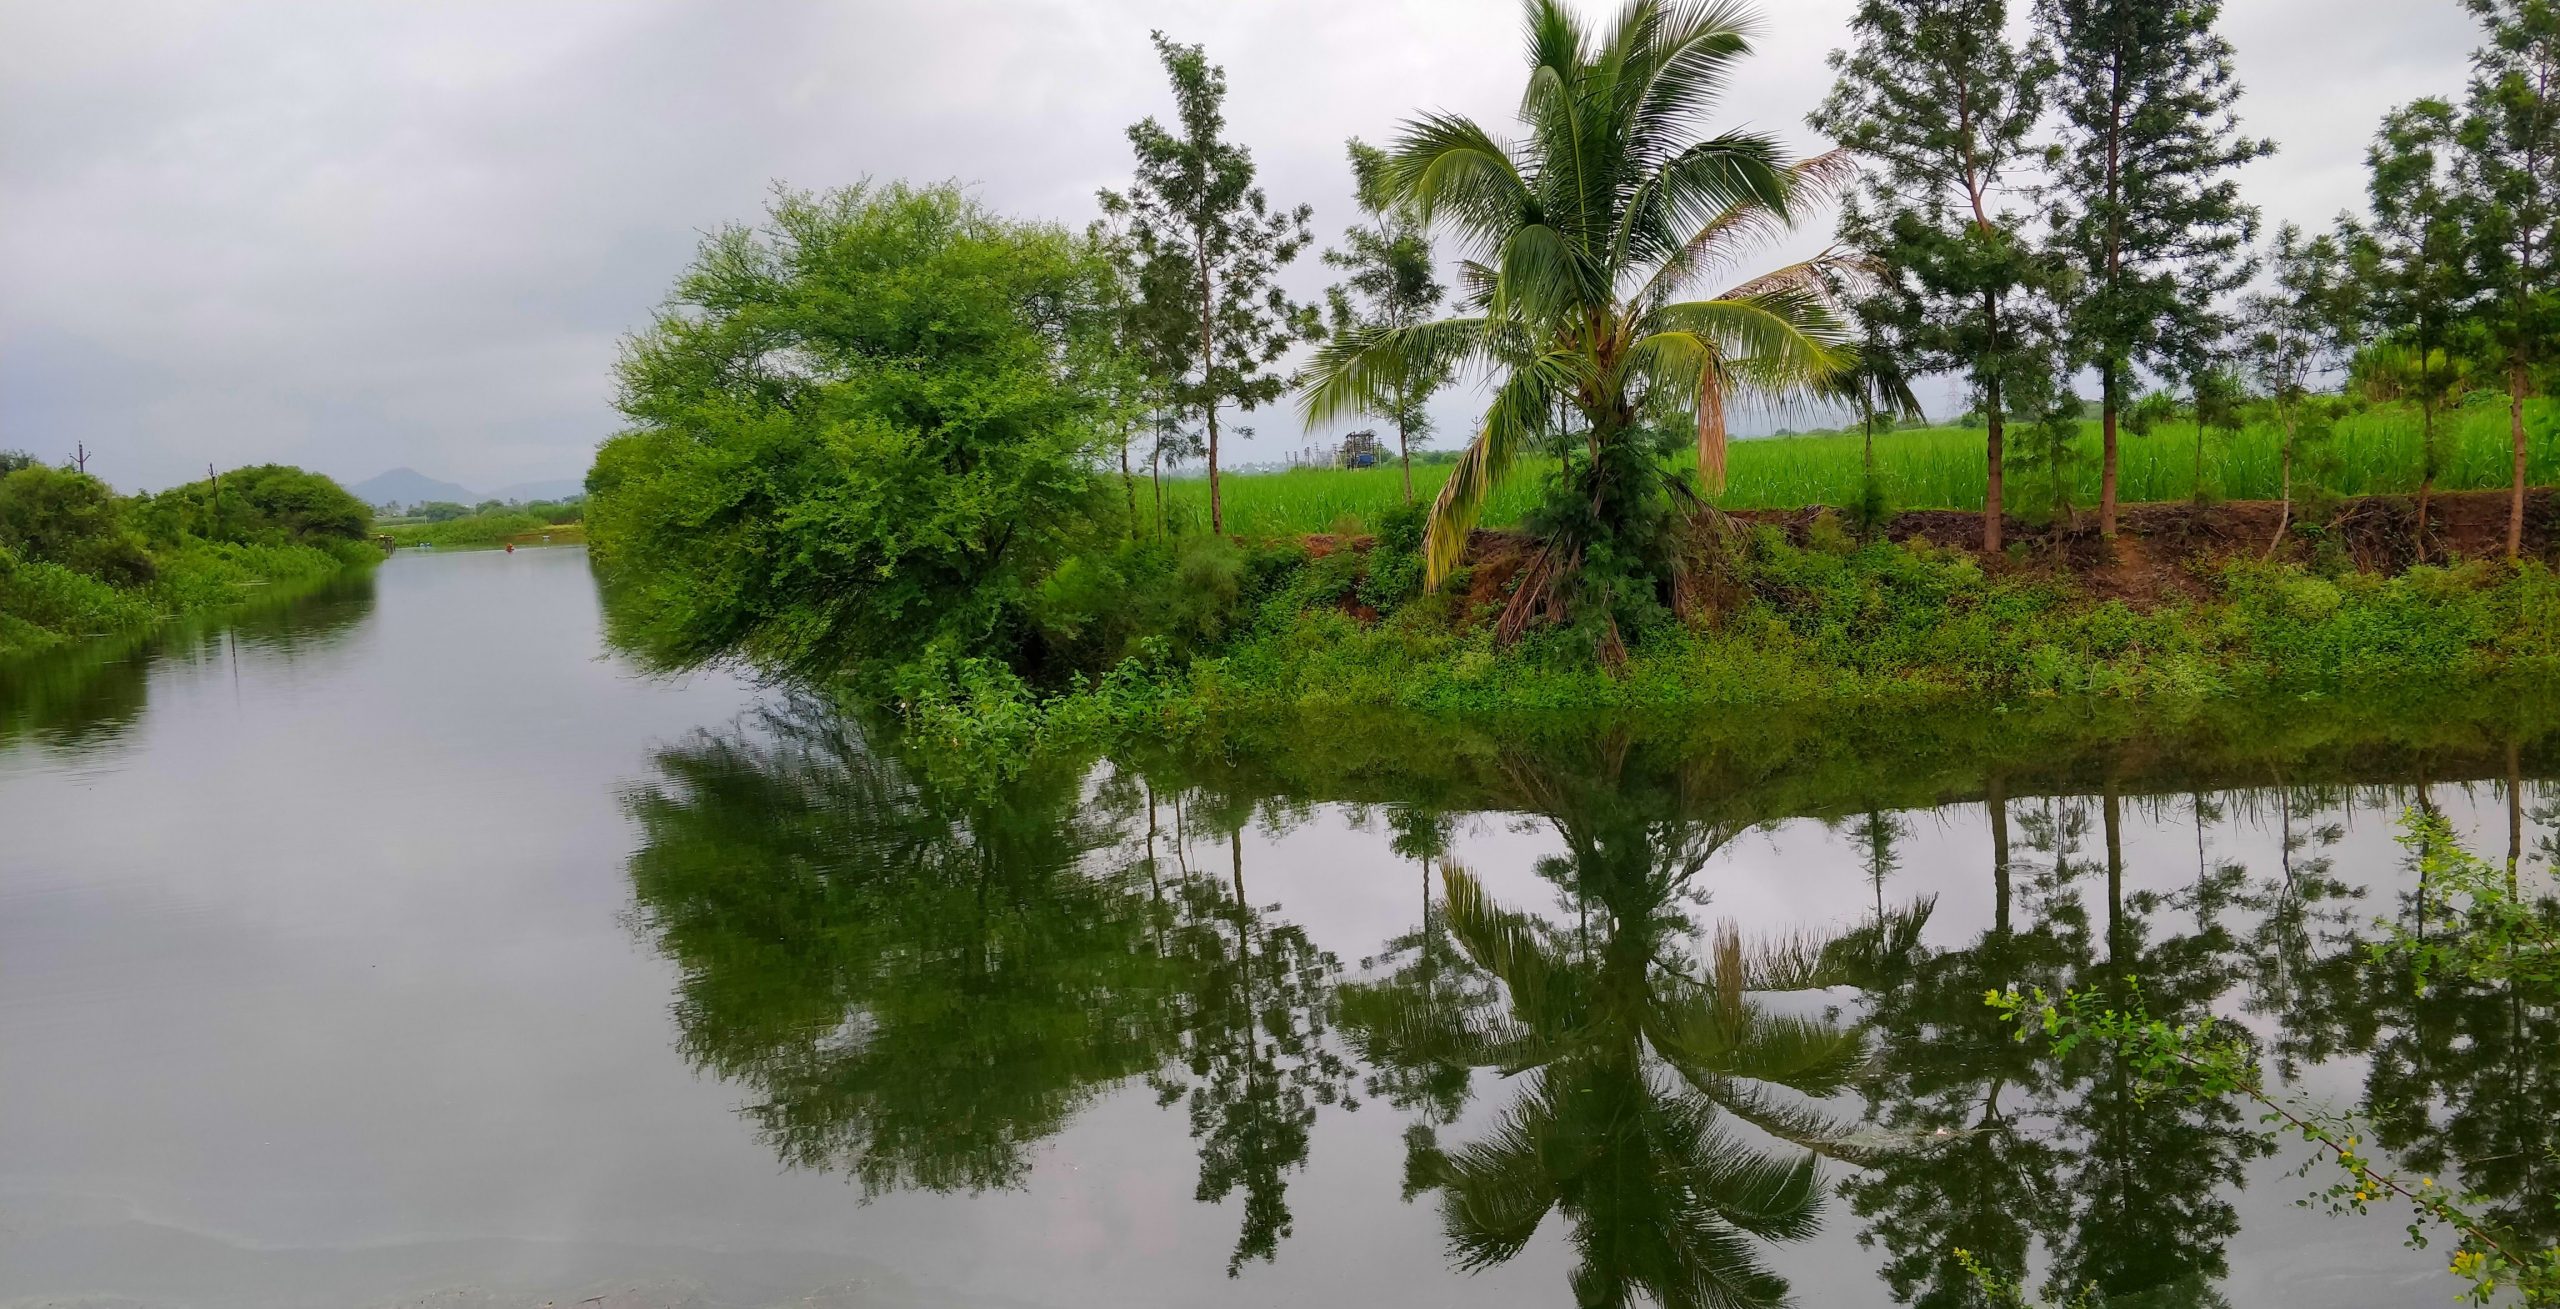 Lakeside Reflection